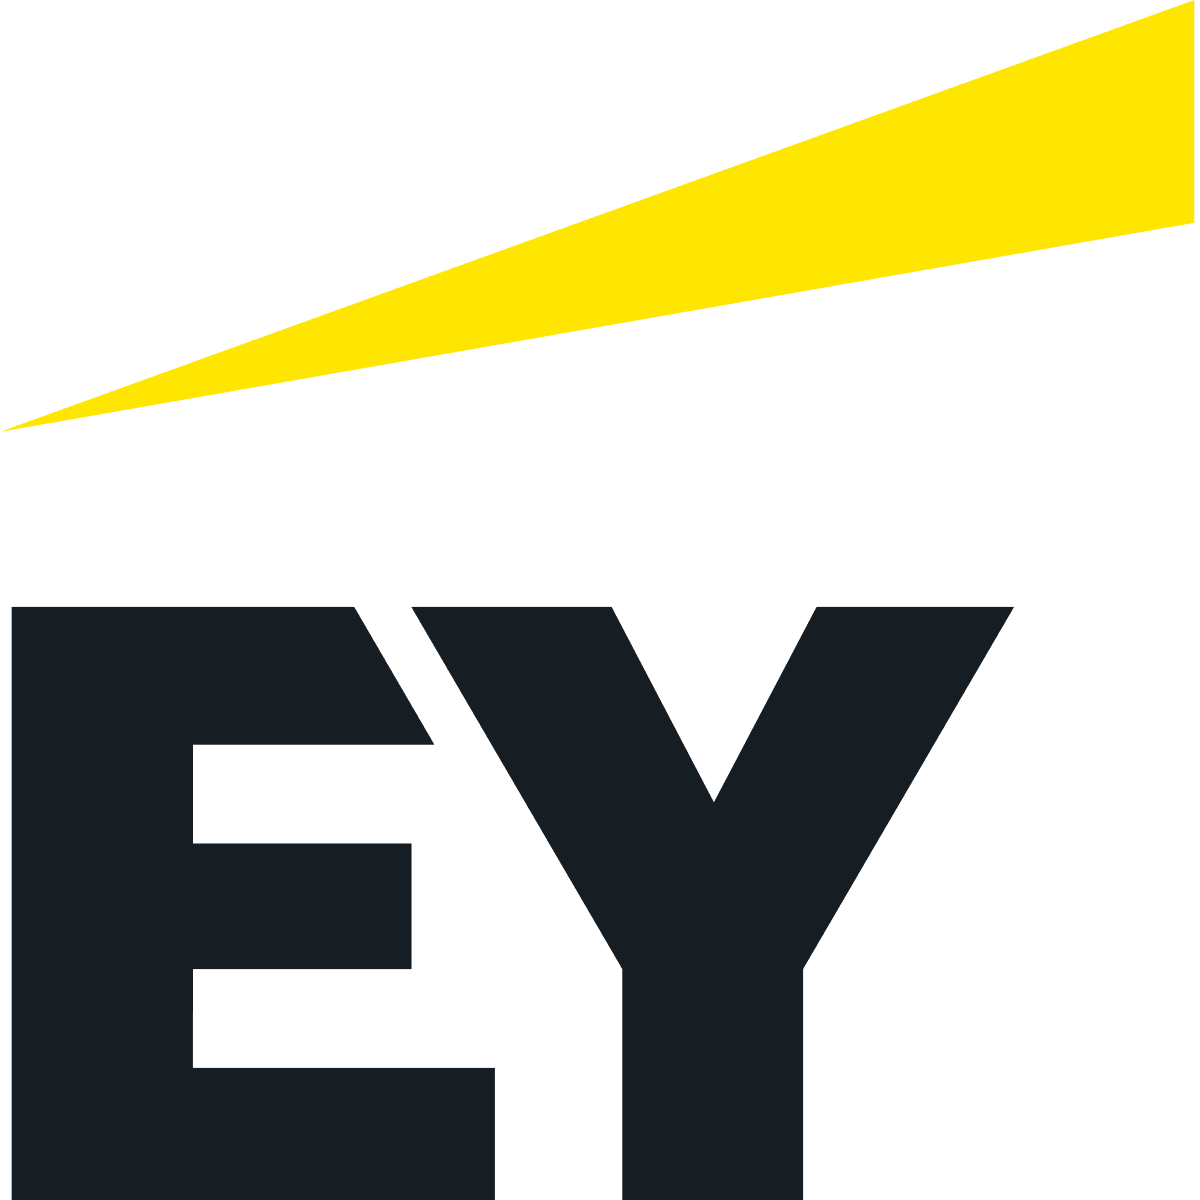 marketing strategy of ey - ey logo